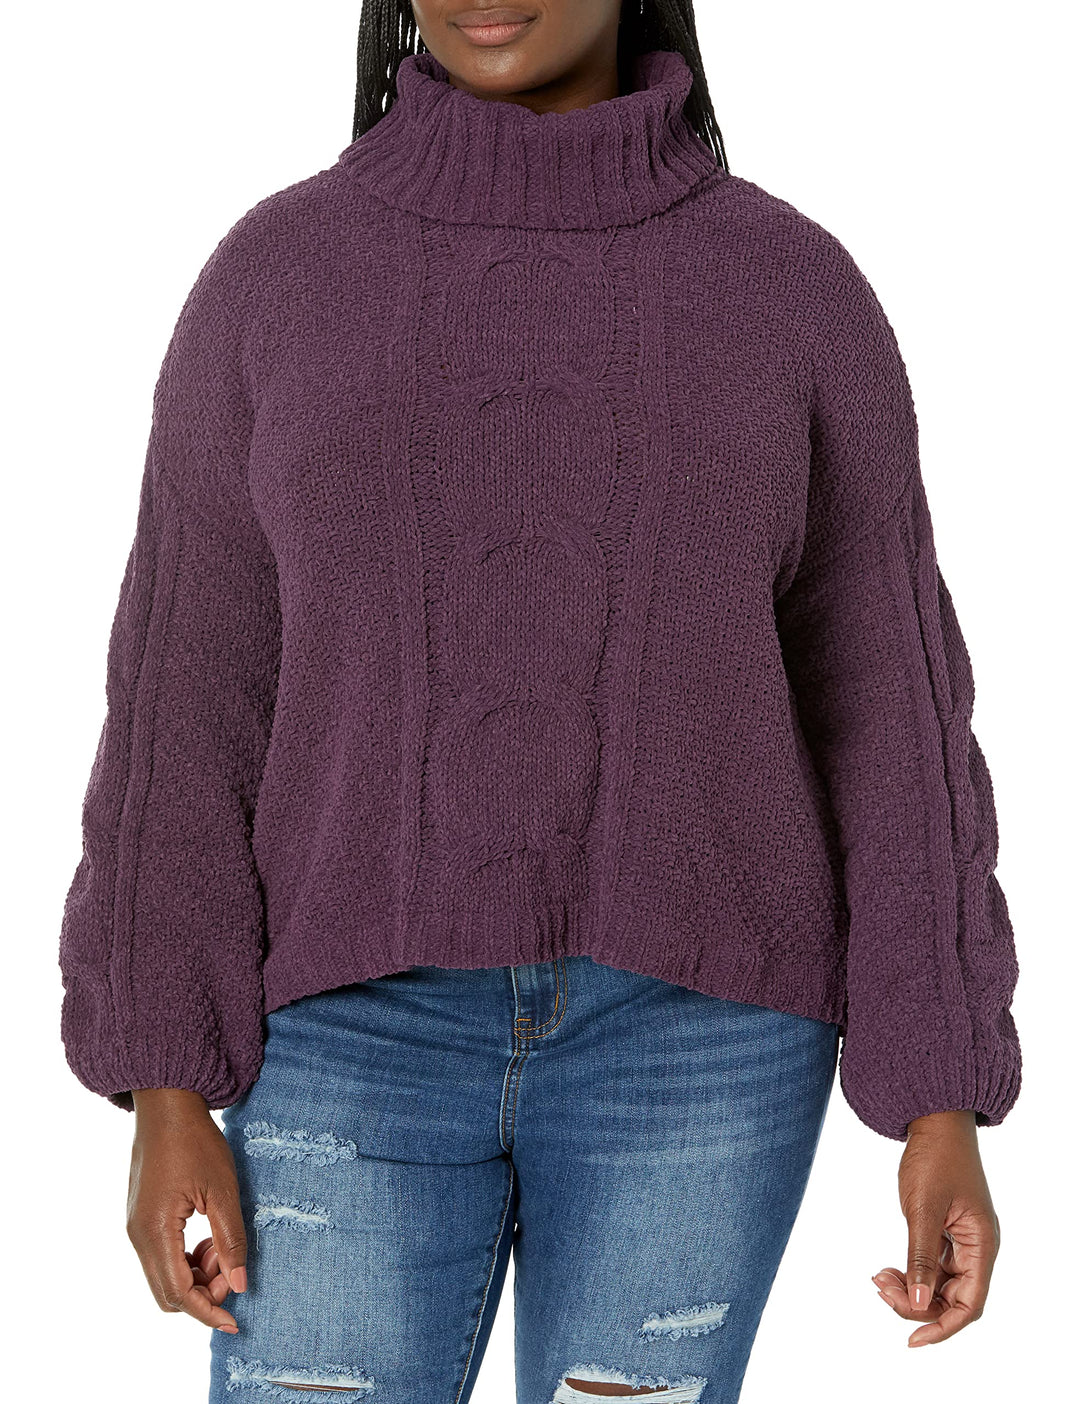 Seven7 Women's Cable Cowl Neck Sweater, Purple, S